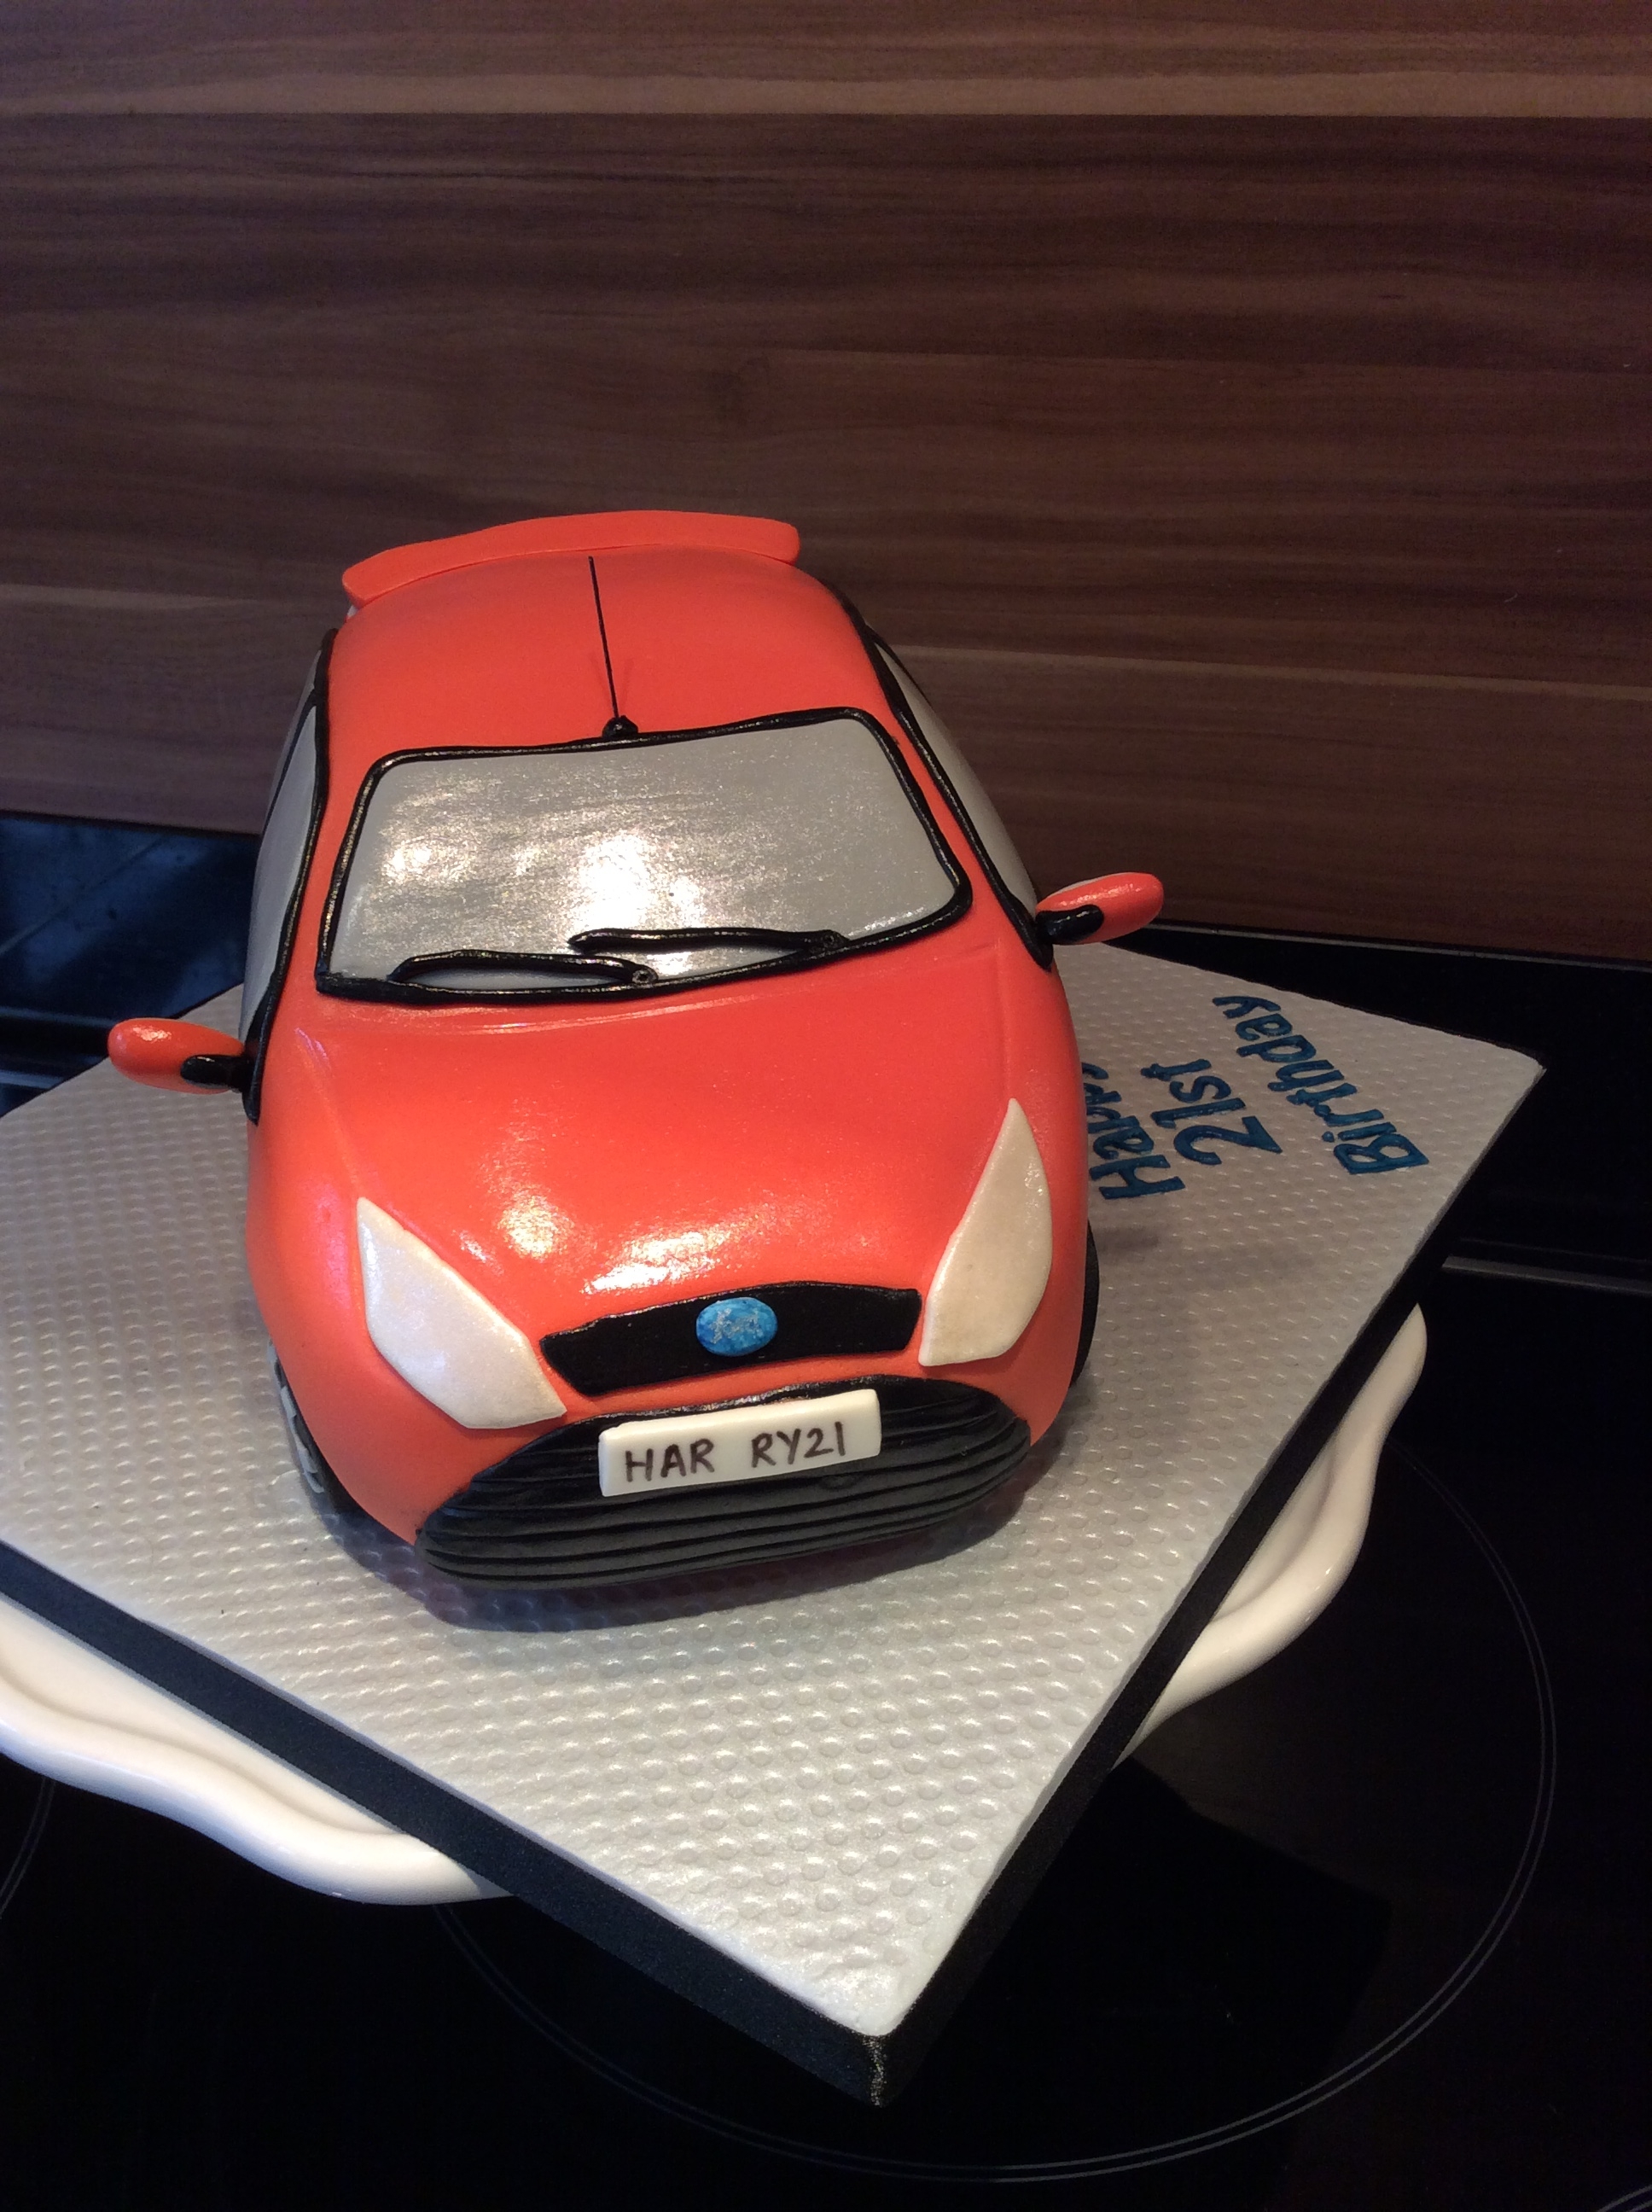 Ford Fiesta cake